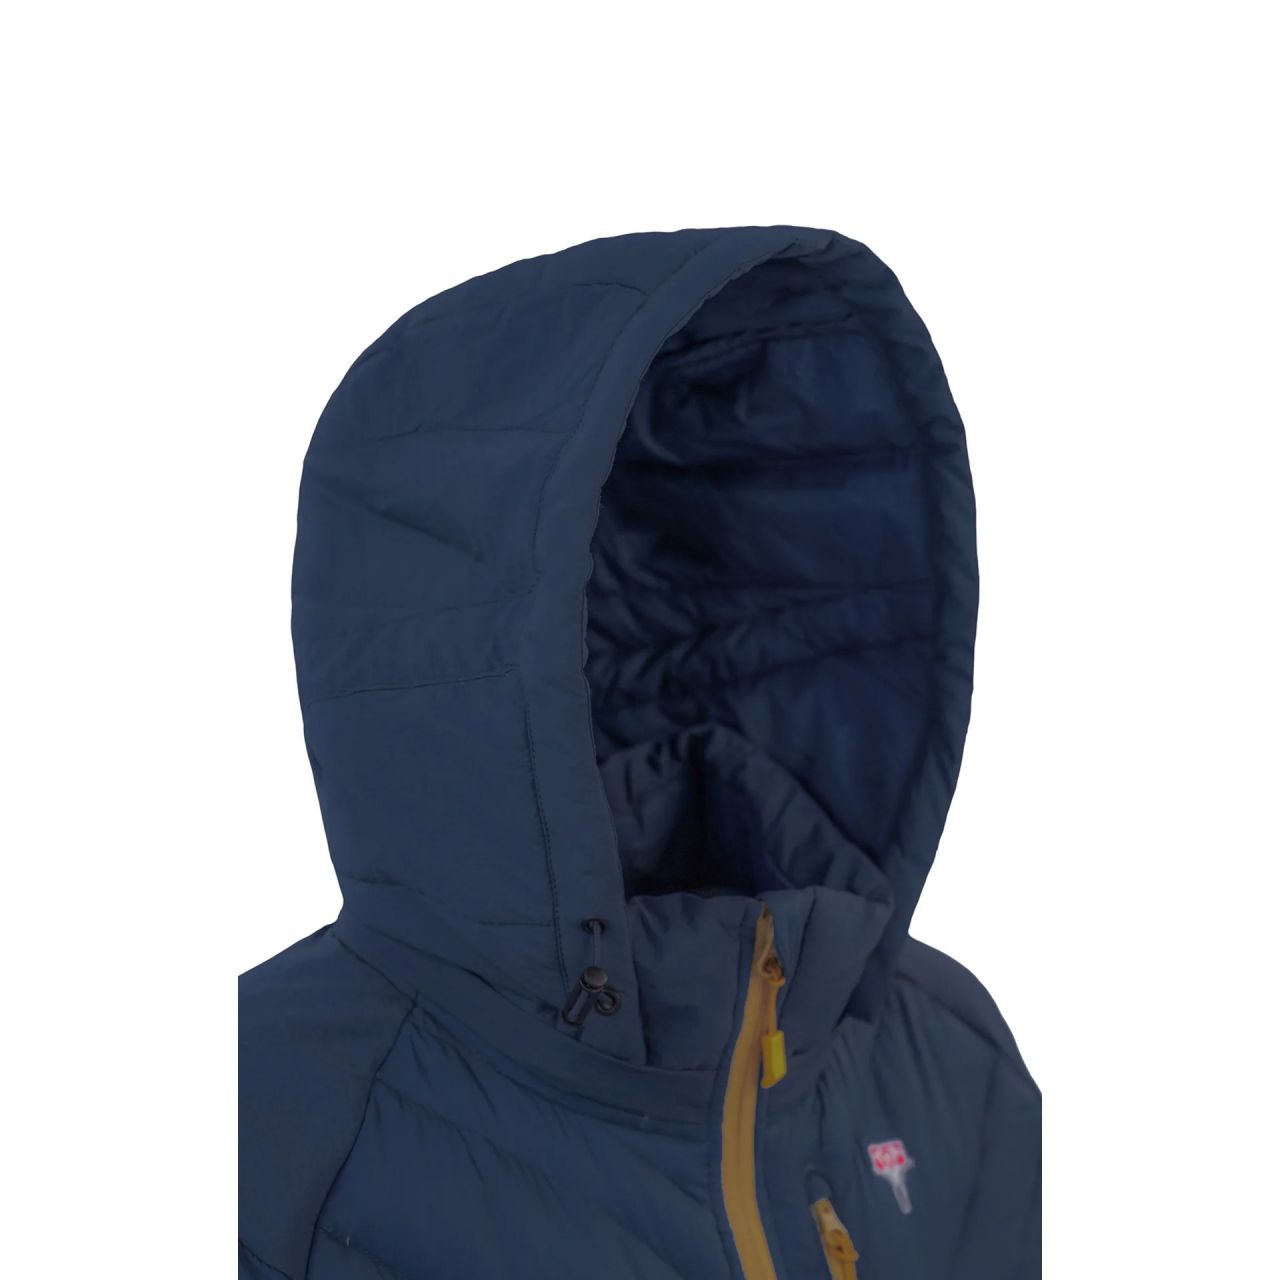 Herrenjacke von GRÜEZI BAG, Modell  "Lightful DownWool Jacket" Saphir Blue - Mustard